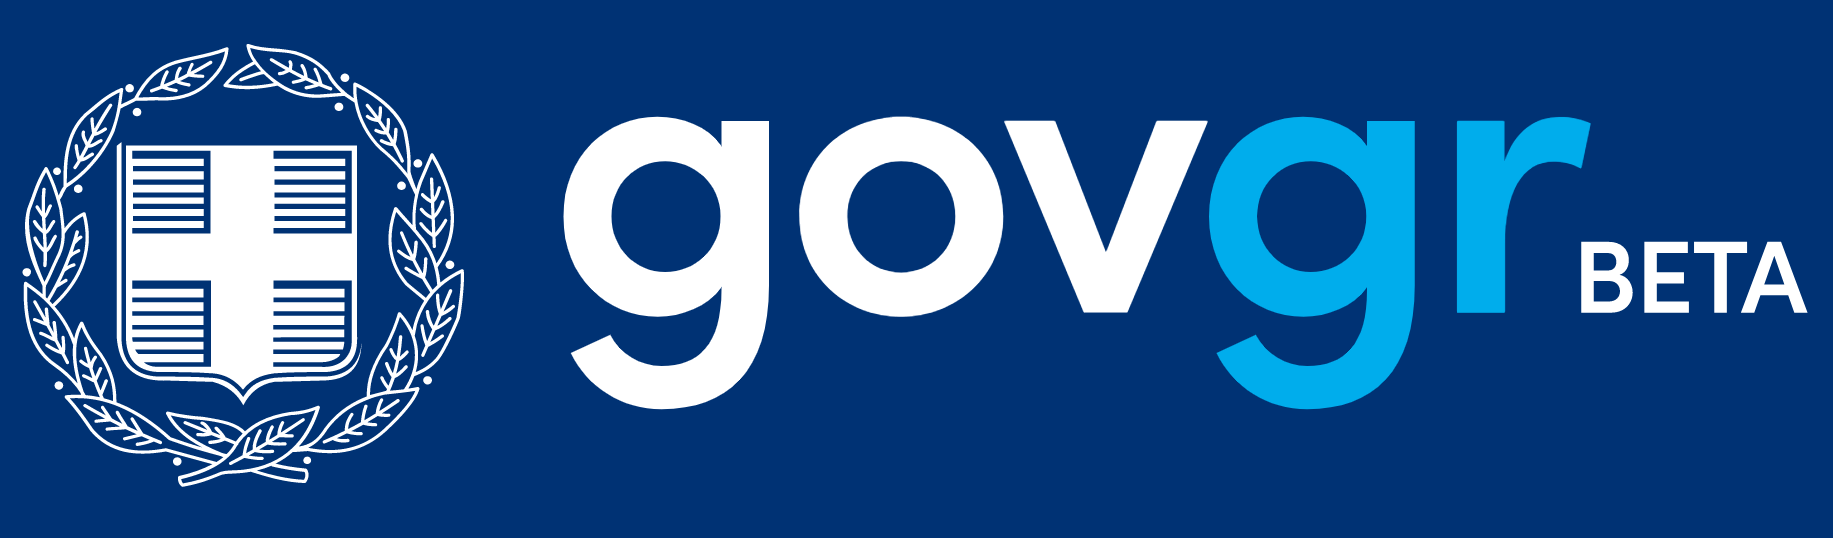 gov.gr: Σε δοκιμαστική λειτουργία το gov.gr – Ηλεκτρονικά η συμπλήρωση και υπογραφή εξουσιοδοτήσεων, υπεύθυνων δηλώσεων και άυλης συνταγογράφησης